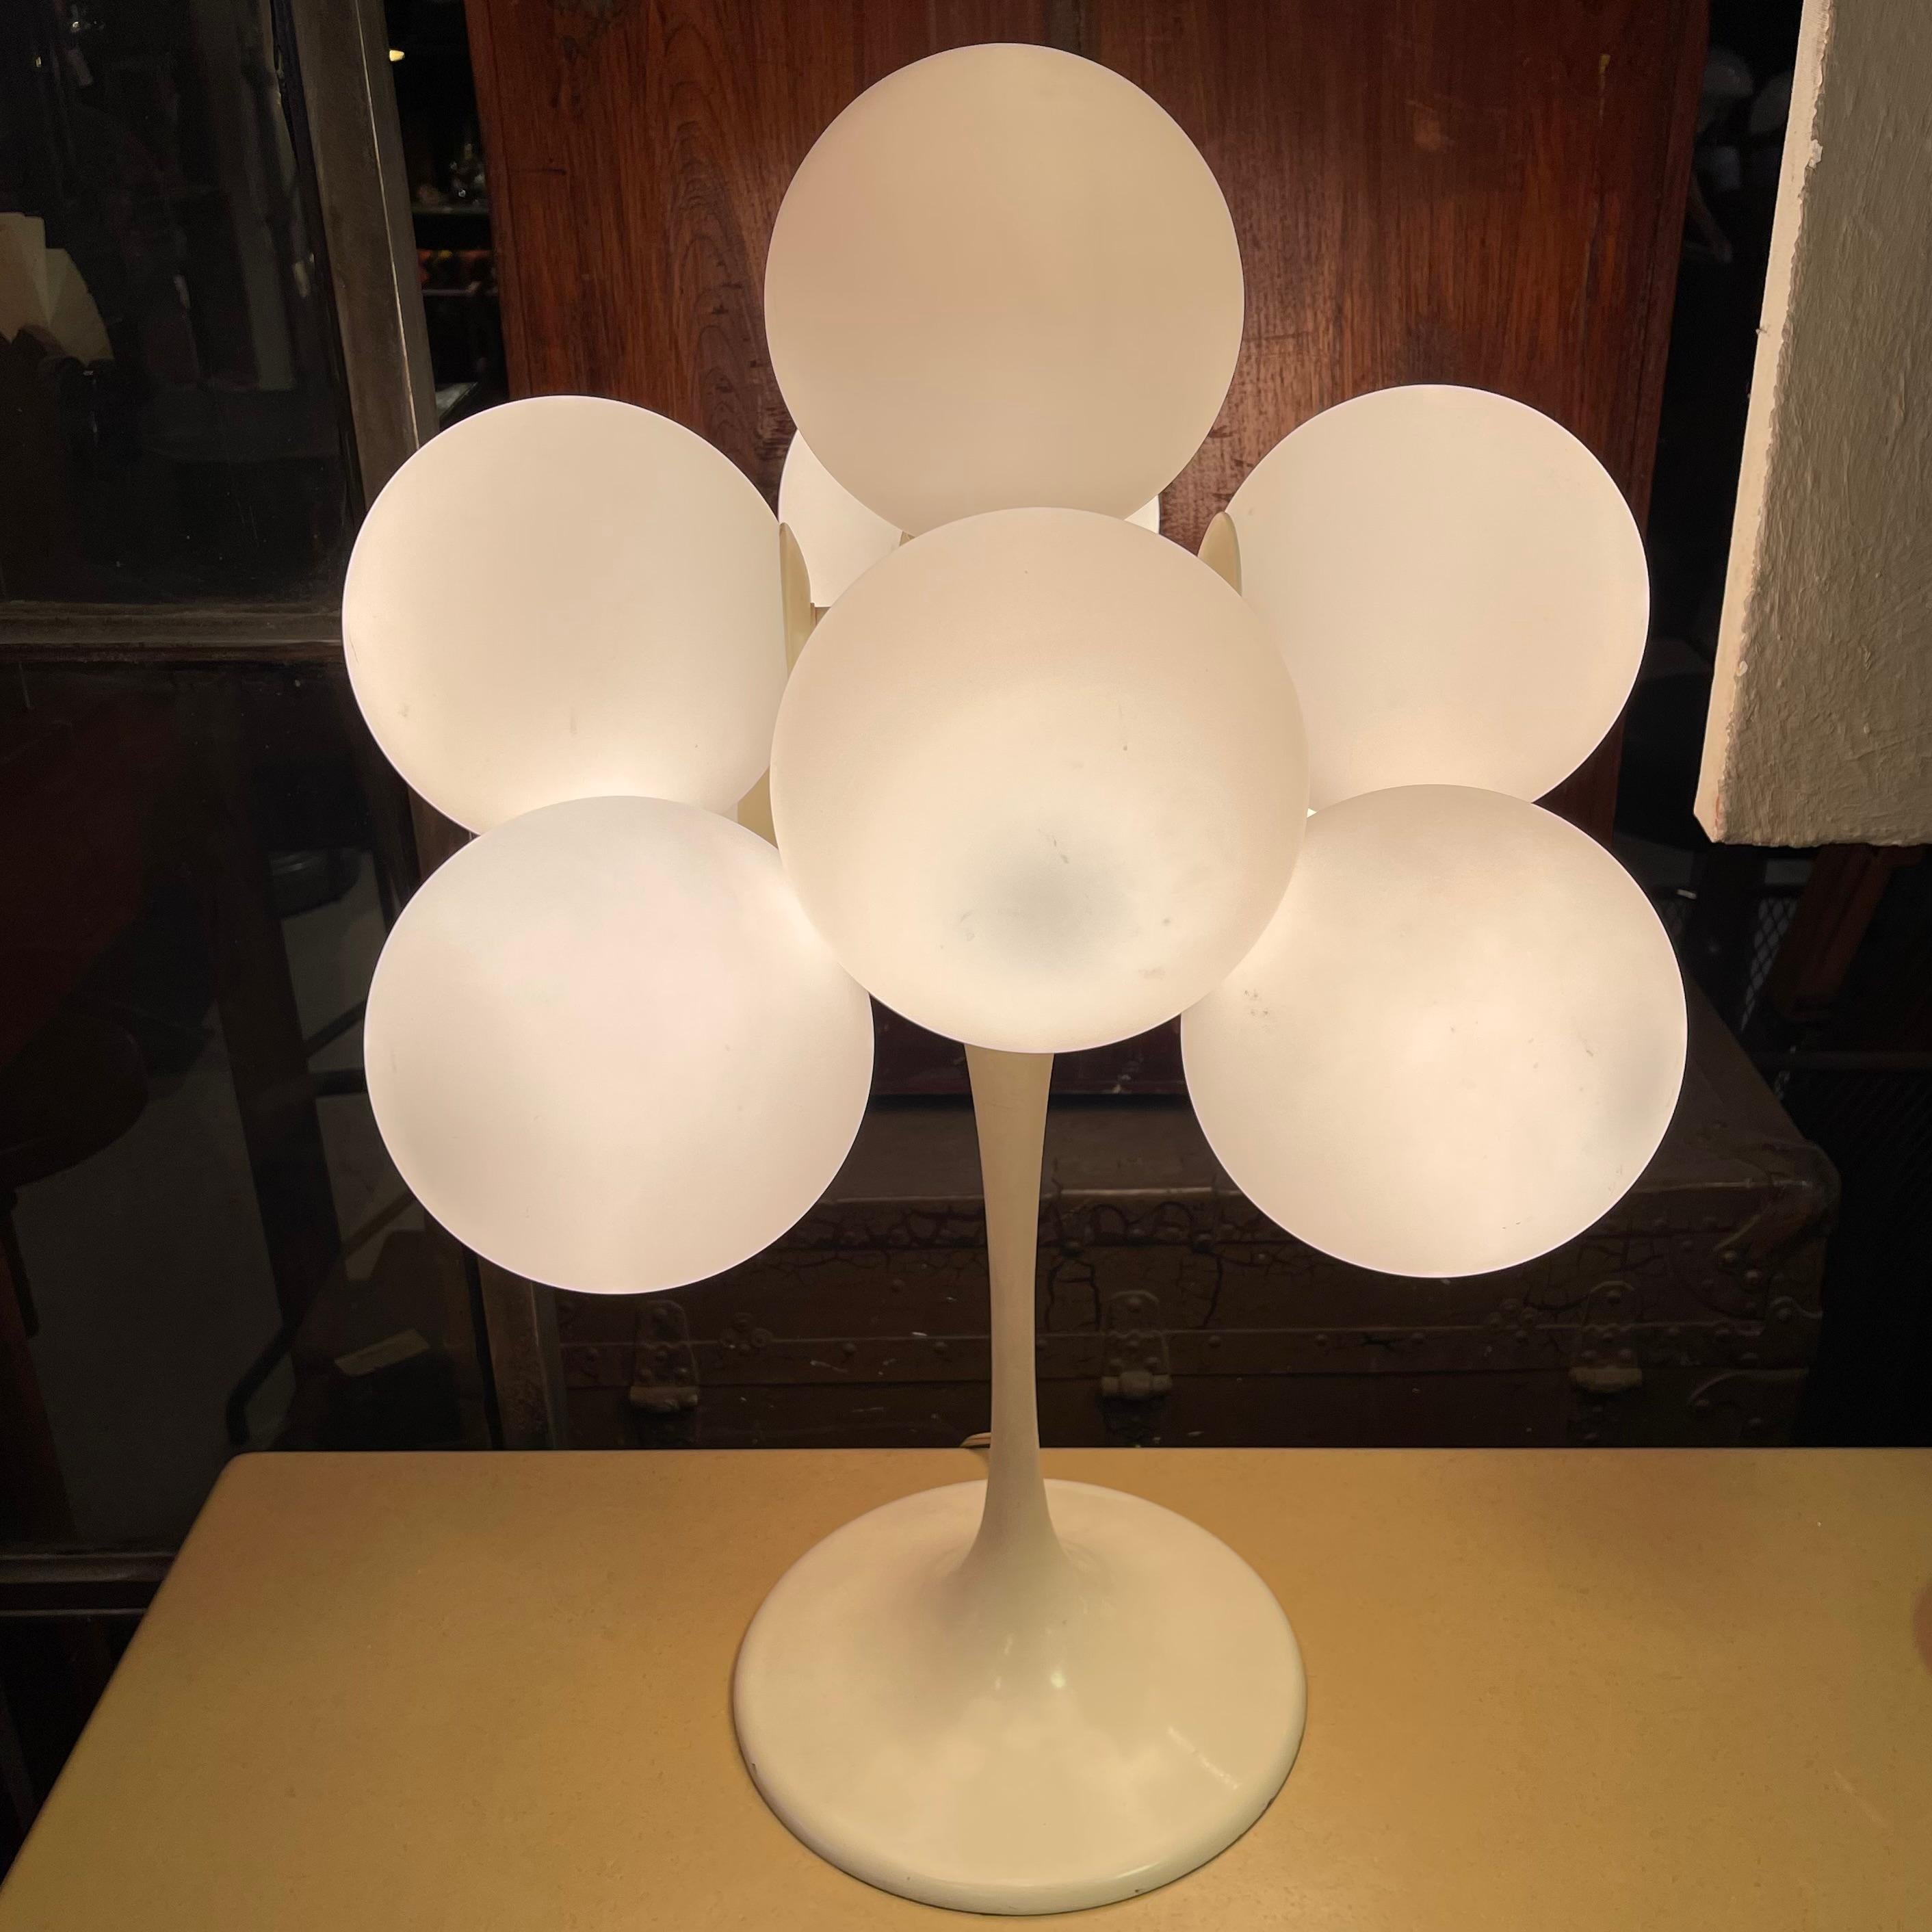 20th Century Multi Globe Table Lamp By E.R. Nele For Temde Leuchten, Switzerland